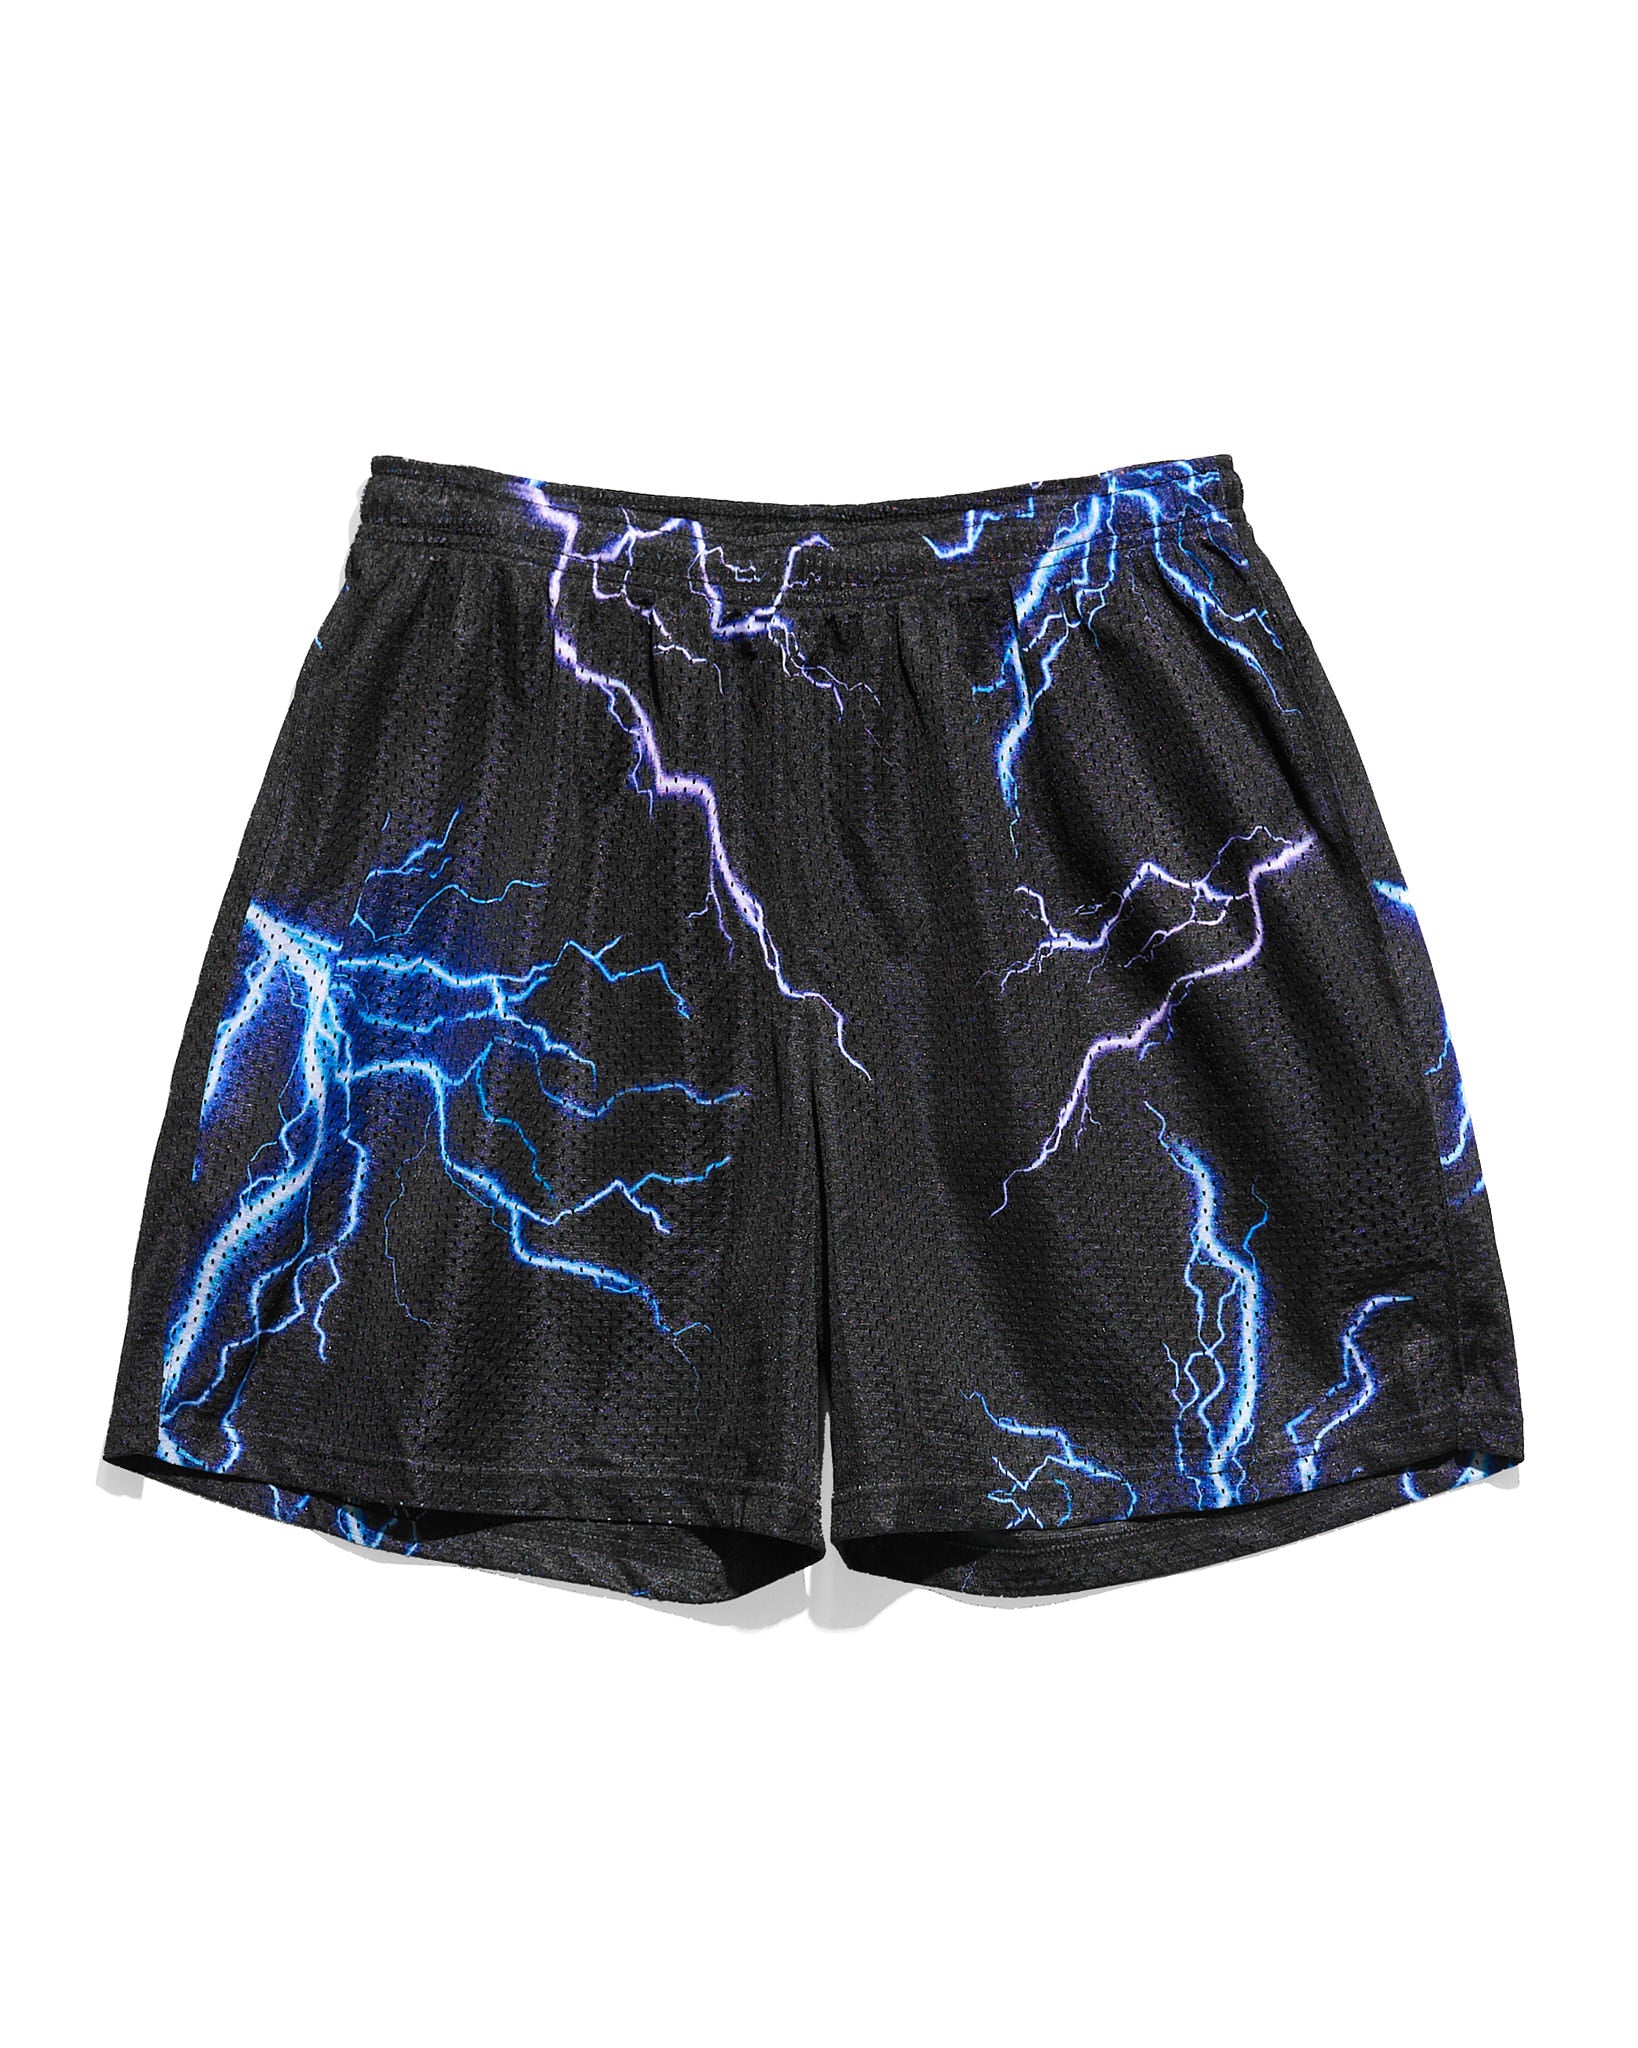 Bolt of Lightning Basketball Shorts - S